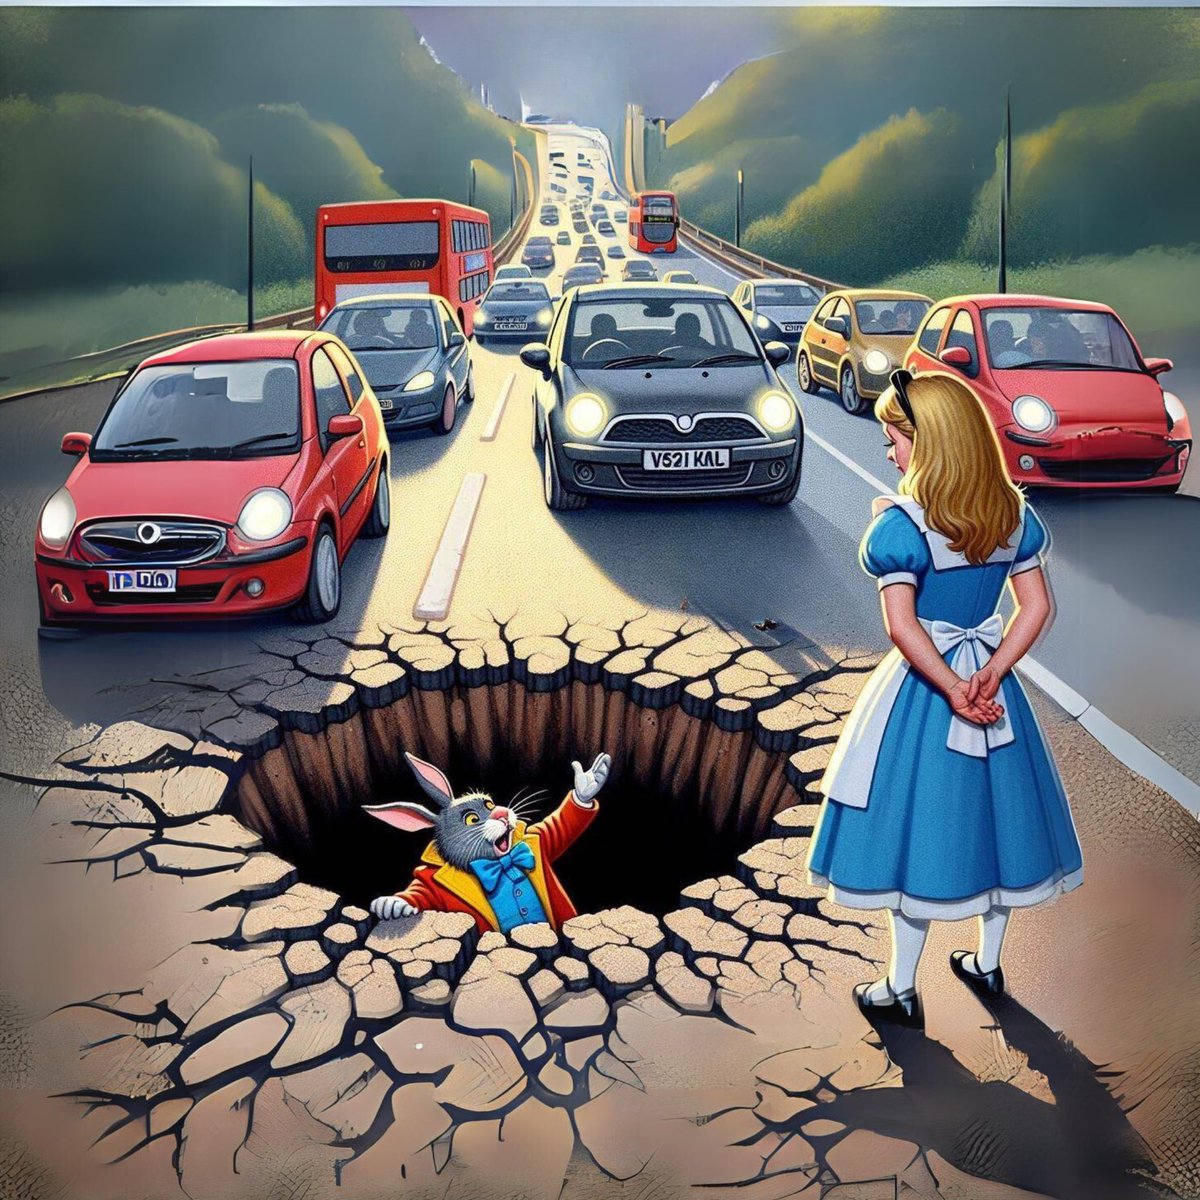 @CheshireEast I was out dodging potholes earlier (as you do) and saw the strangest thing! 😩
#potholes #driving #ukroads #roads #highways
#Wonderland @iSandbach @Sandbach_gov_uk